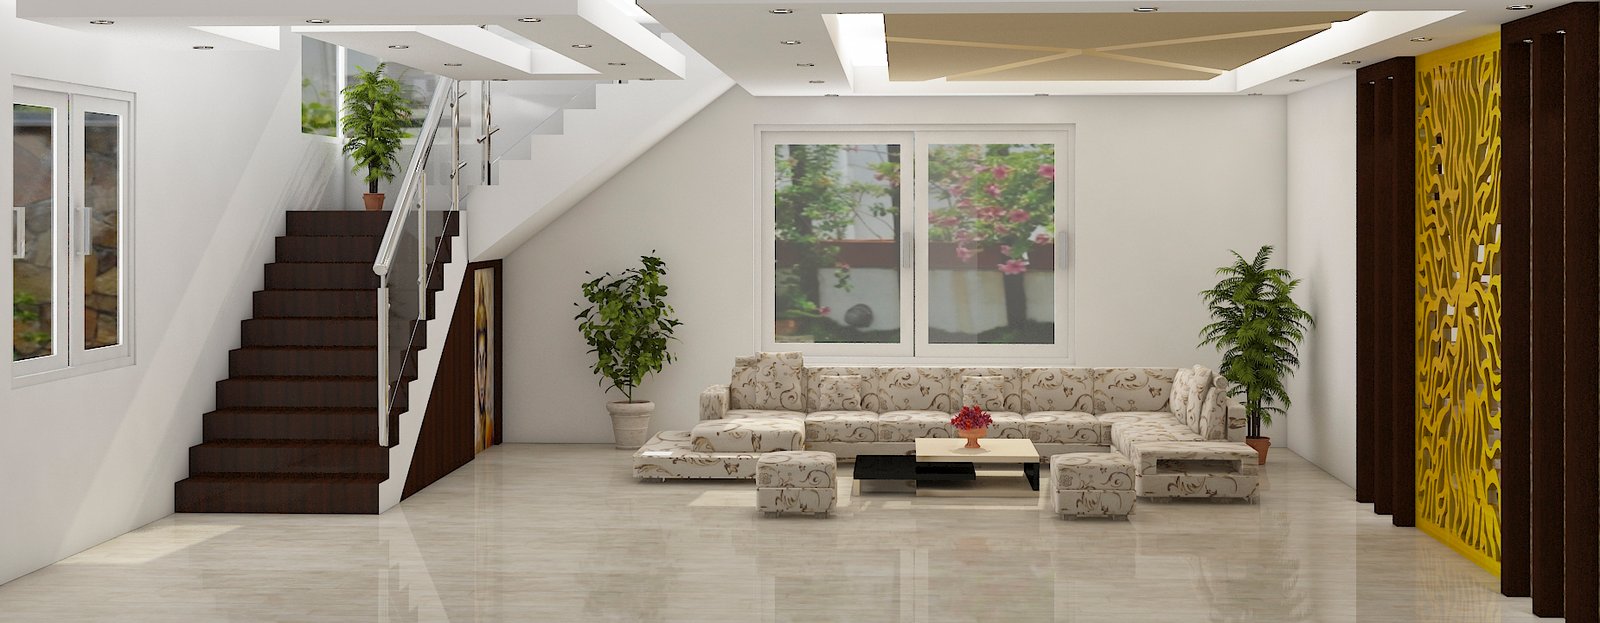 Luxurous lobby ideas from interior designer